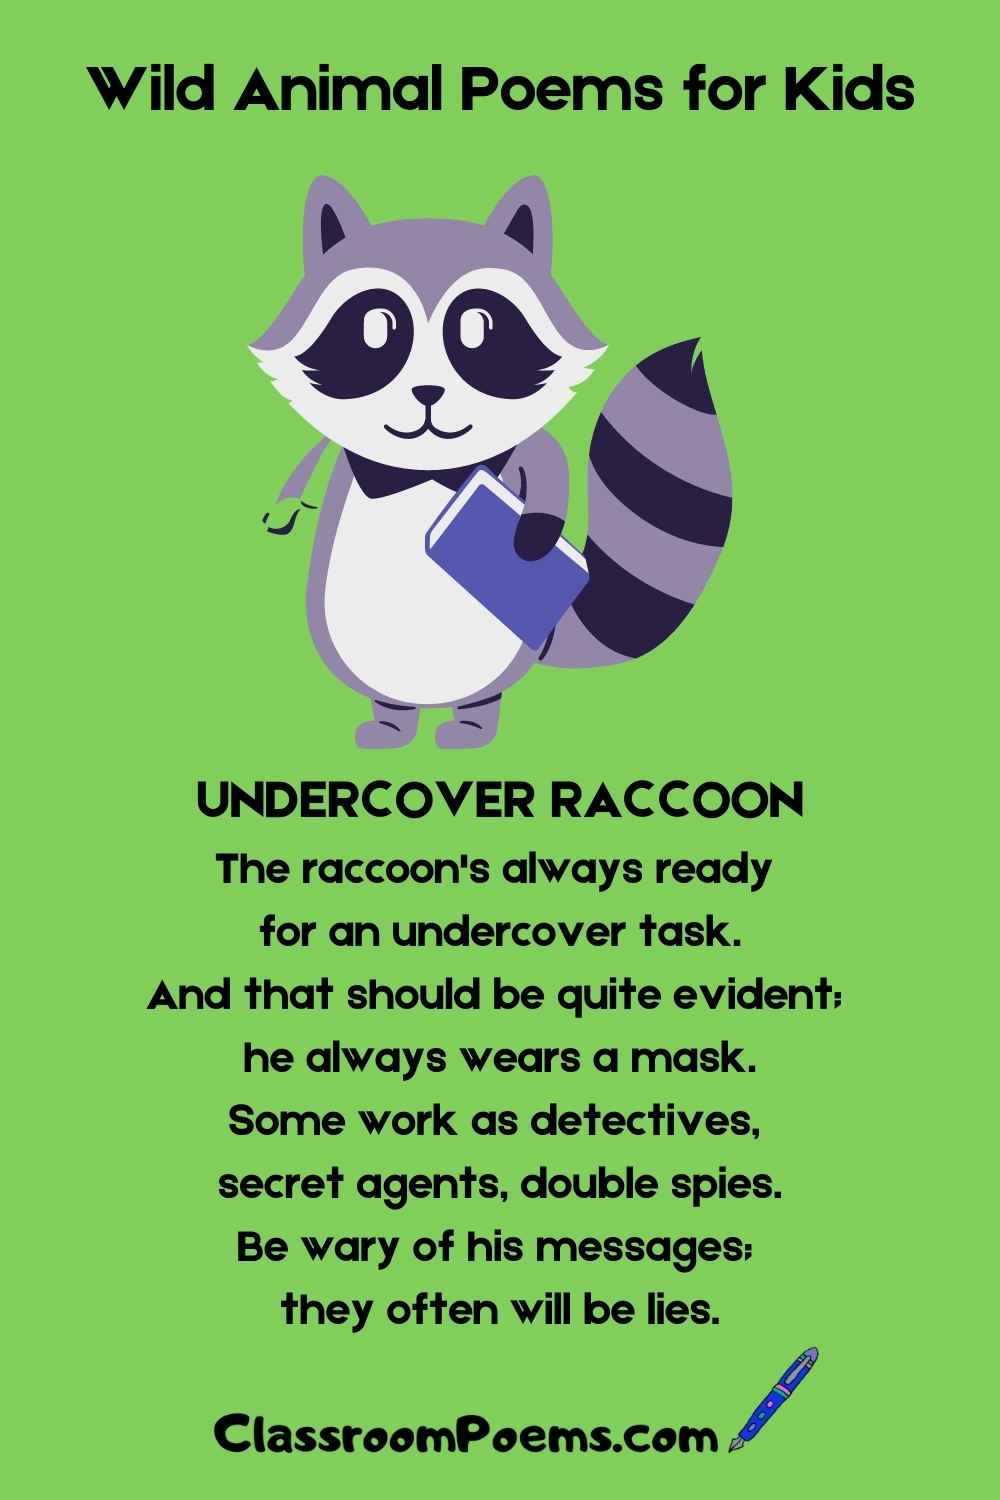 Raccoon poem, wild animal poems for kids on ClassroomPoems.com